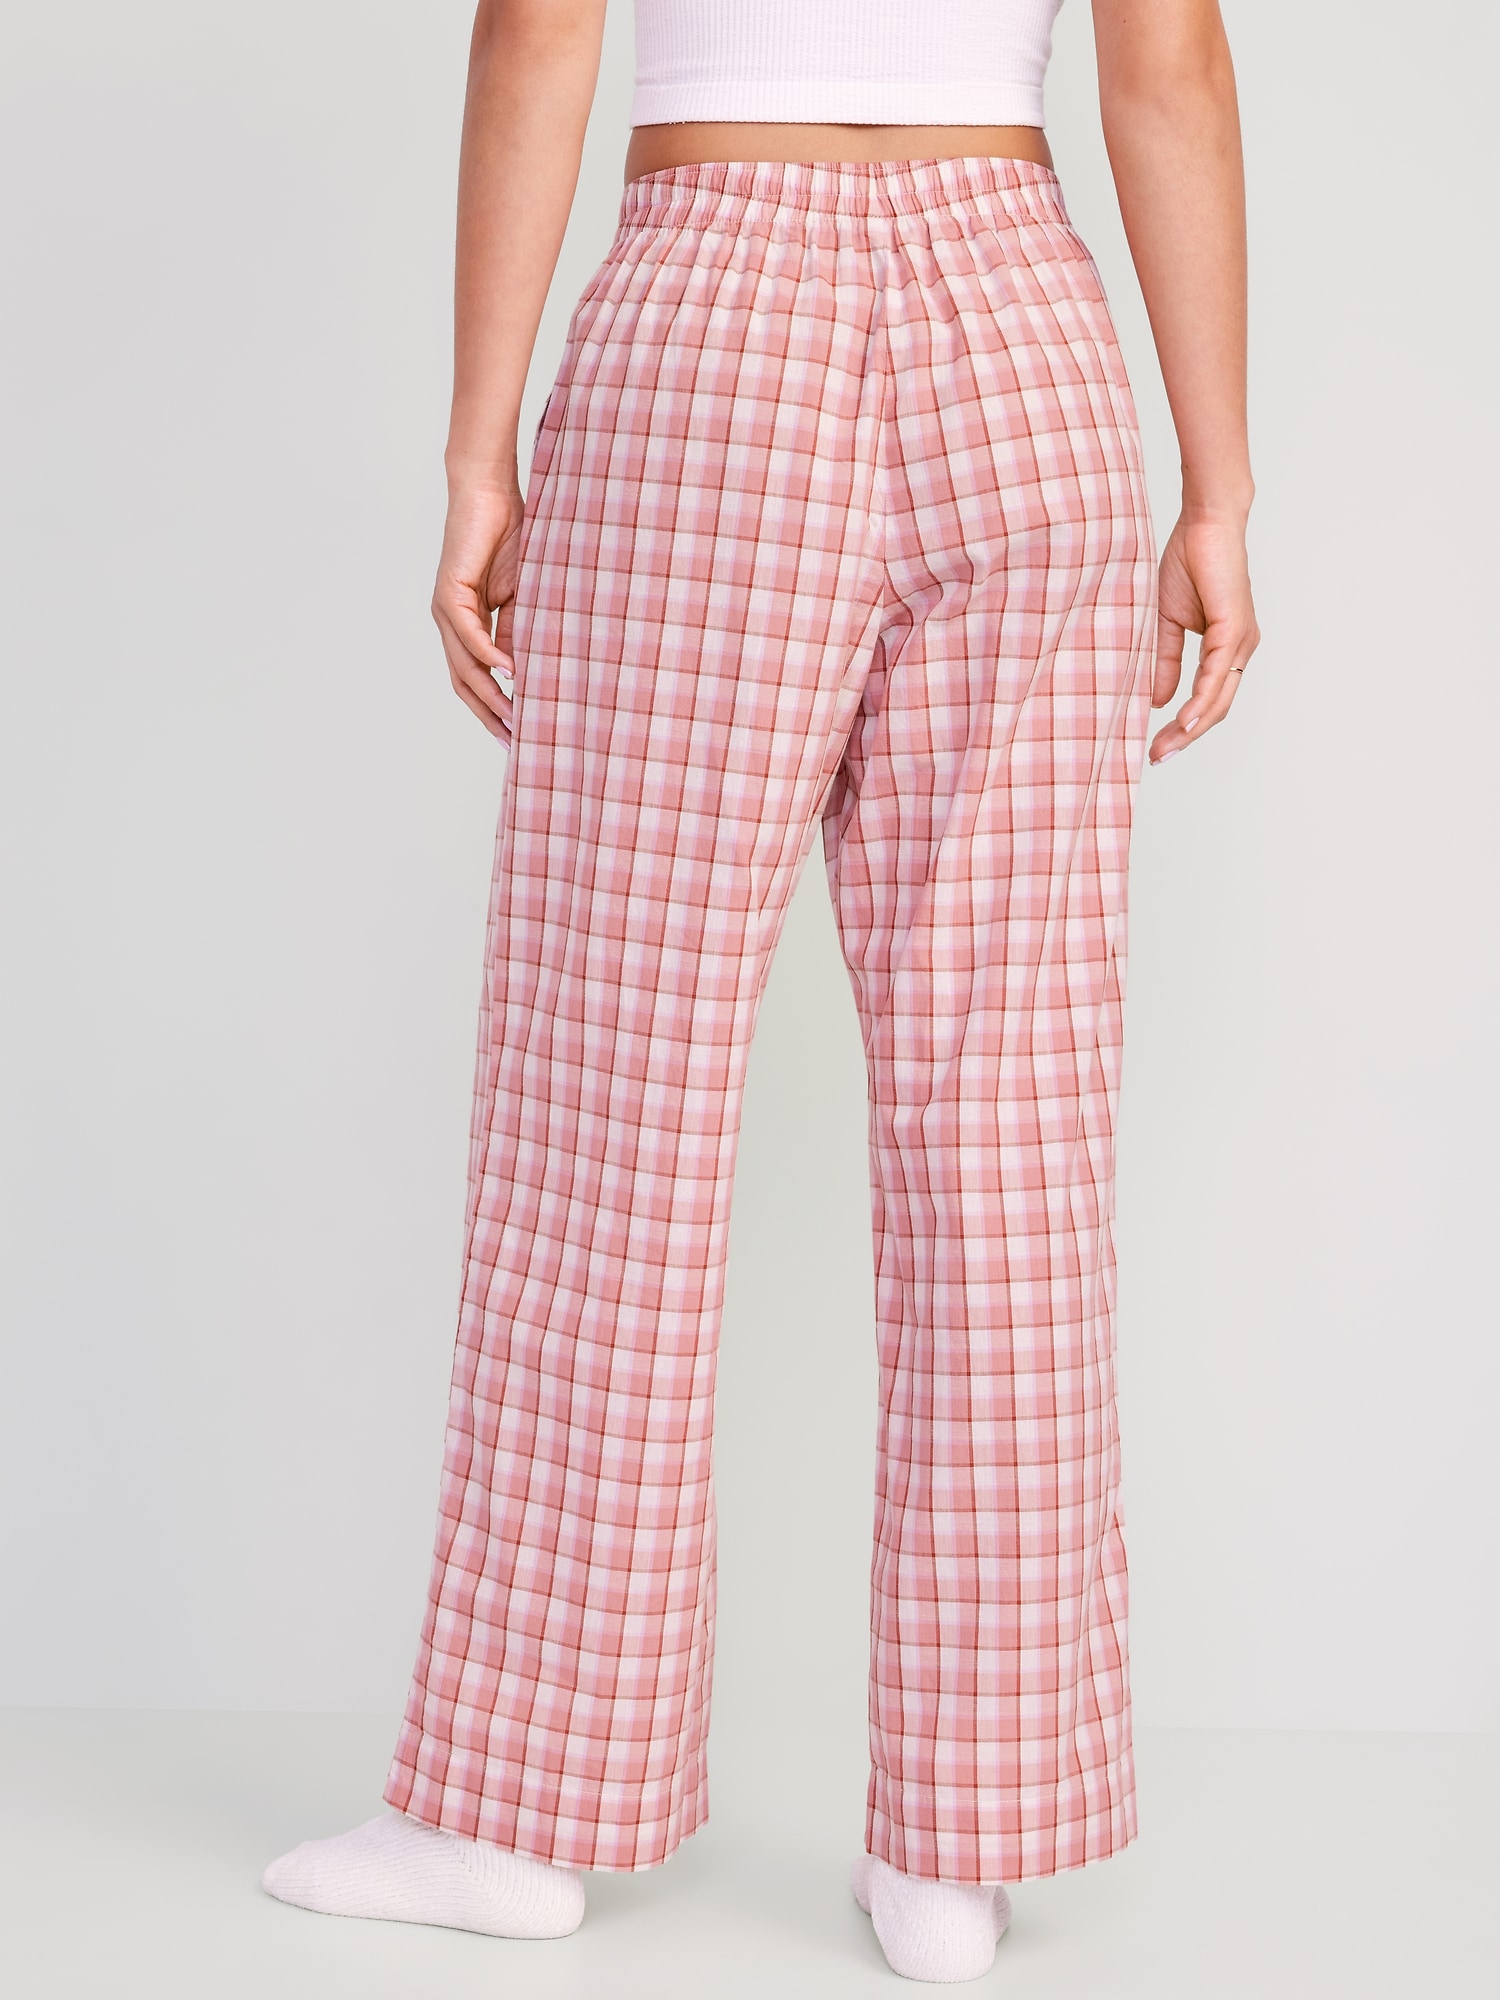 Old Navy Pink Plaid Pajama Pants Size L